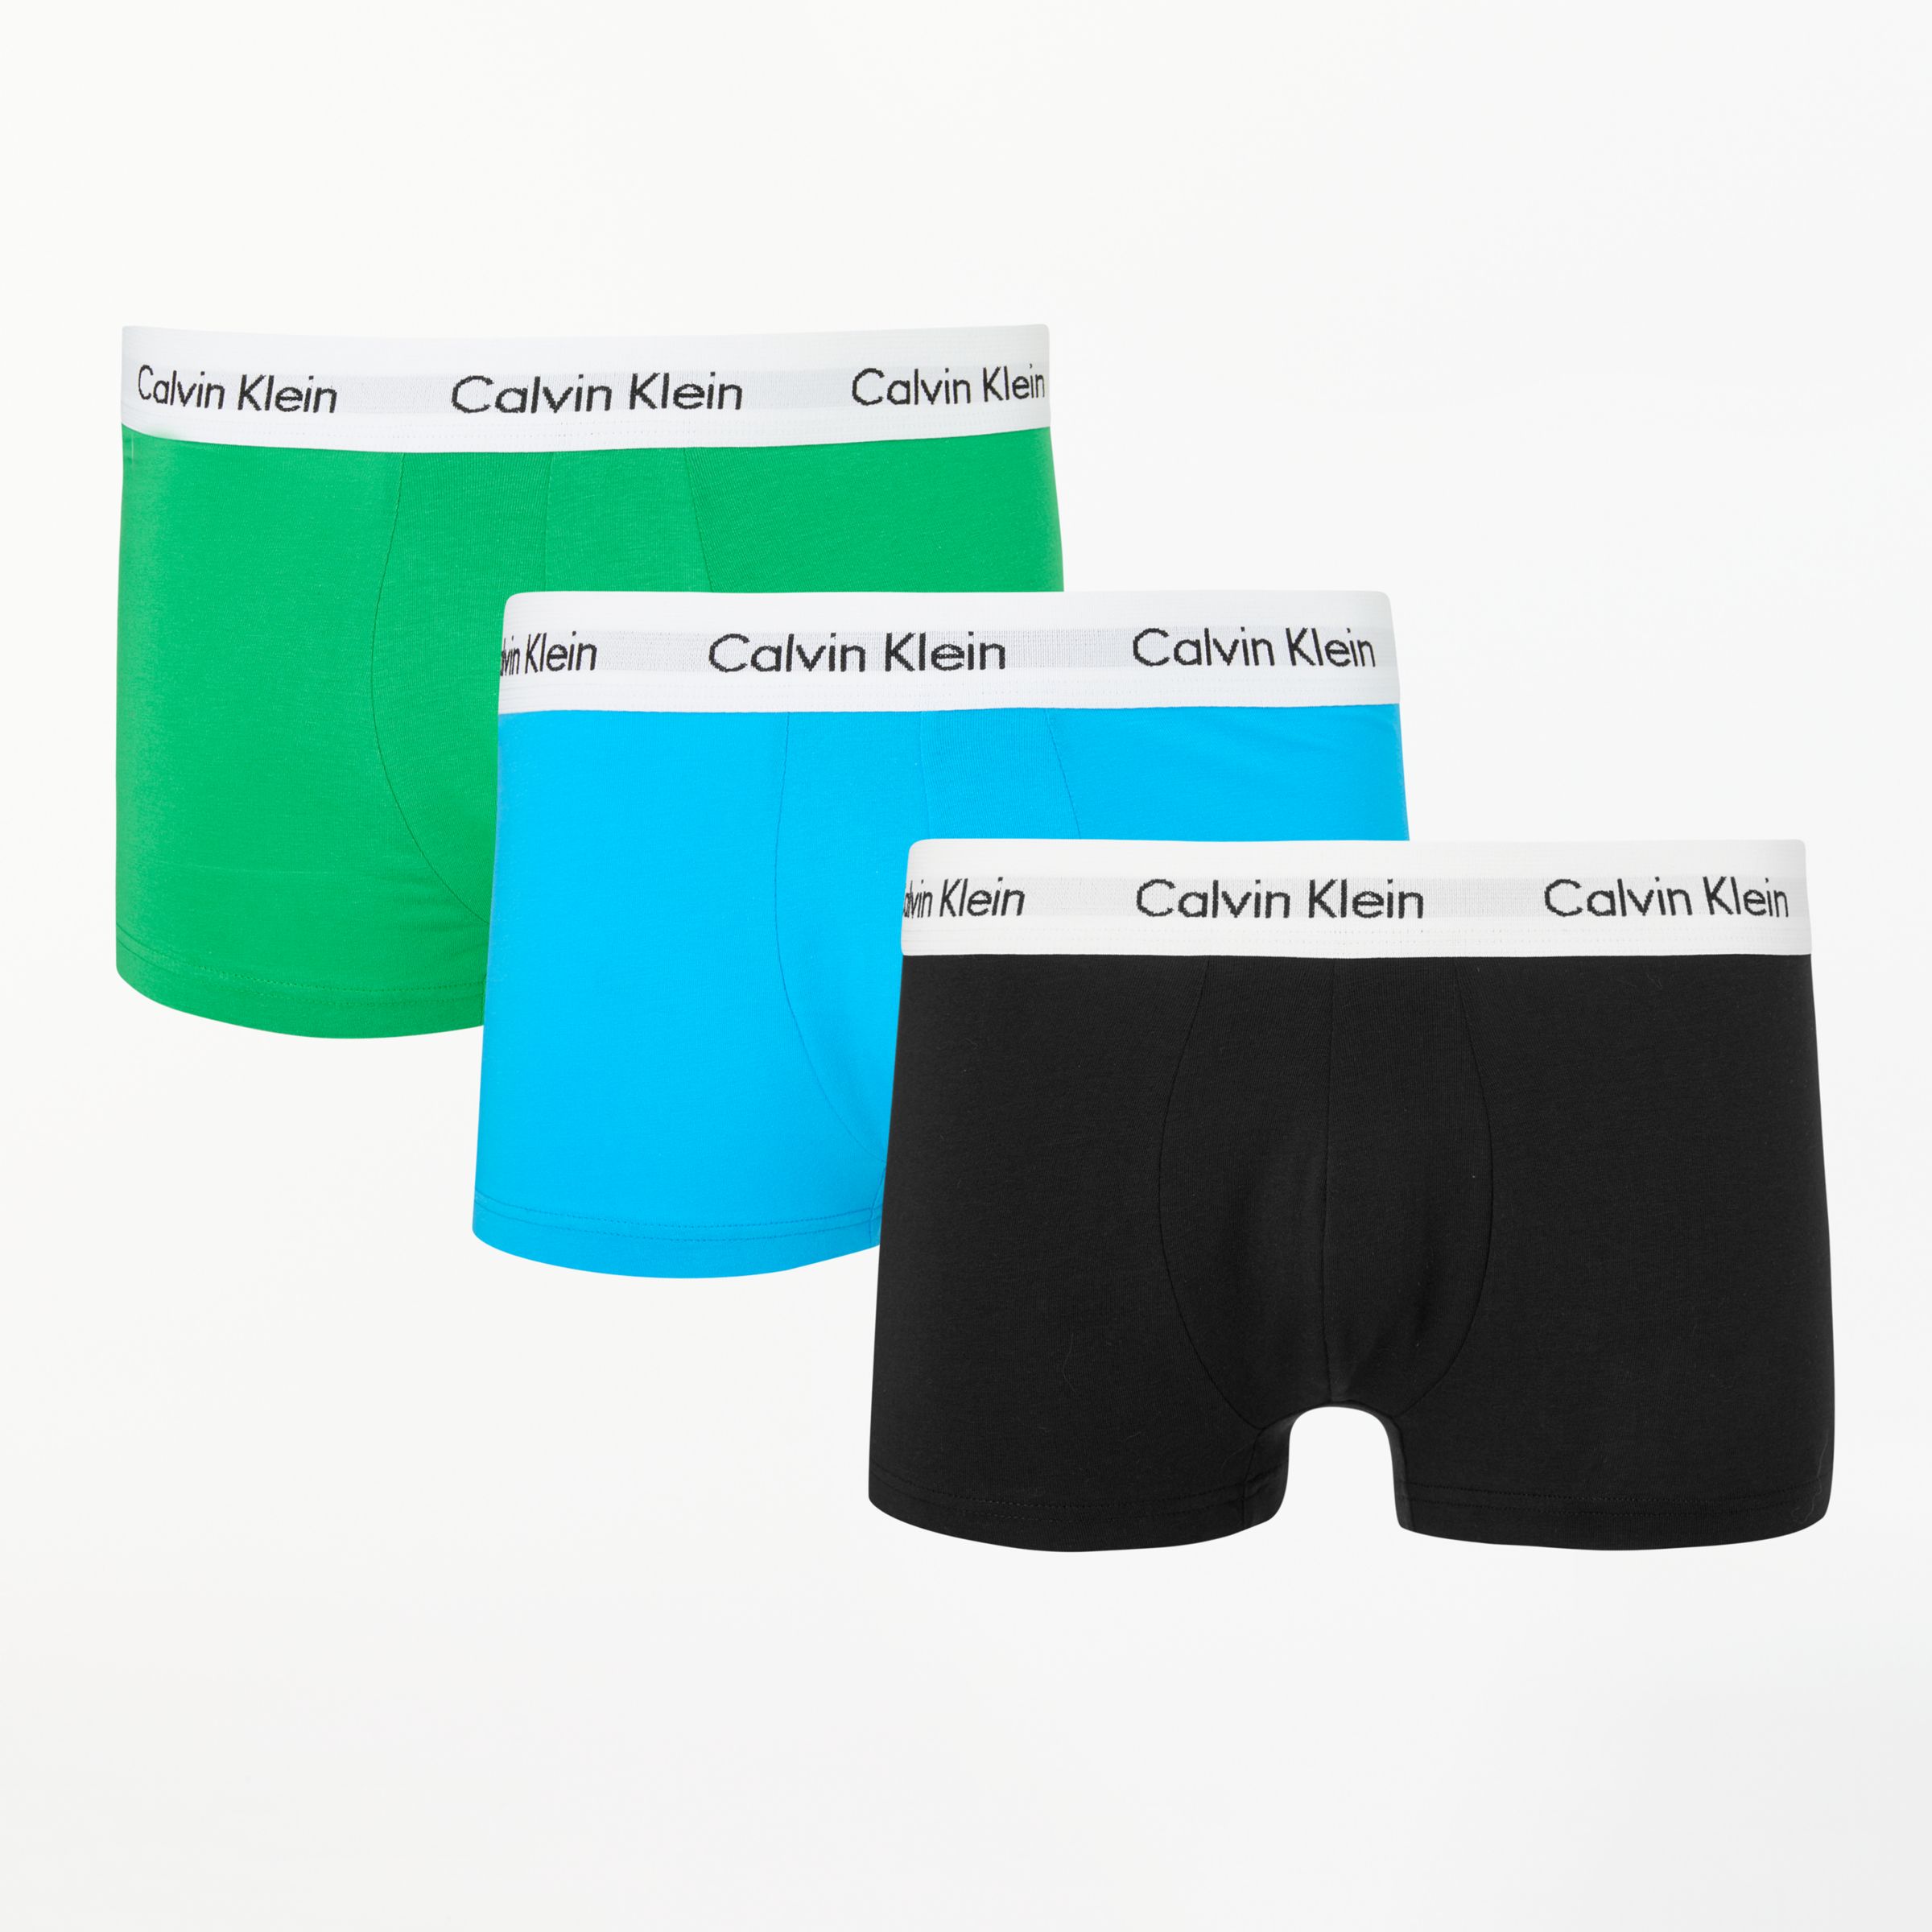 Calvin Klein Underwear Low Rise Trunks, Pack of 3, Green/Blue/Black